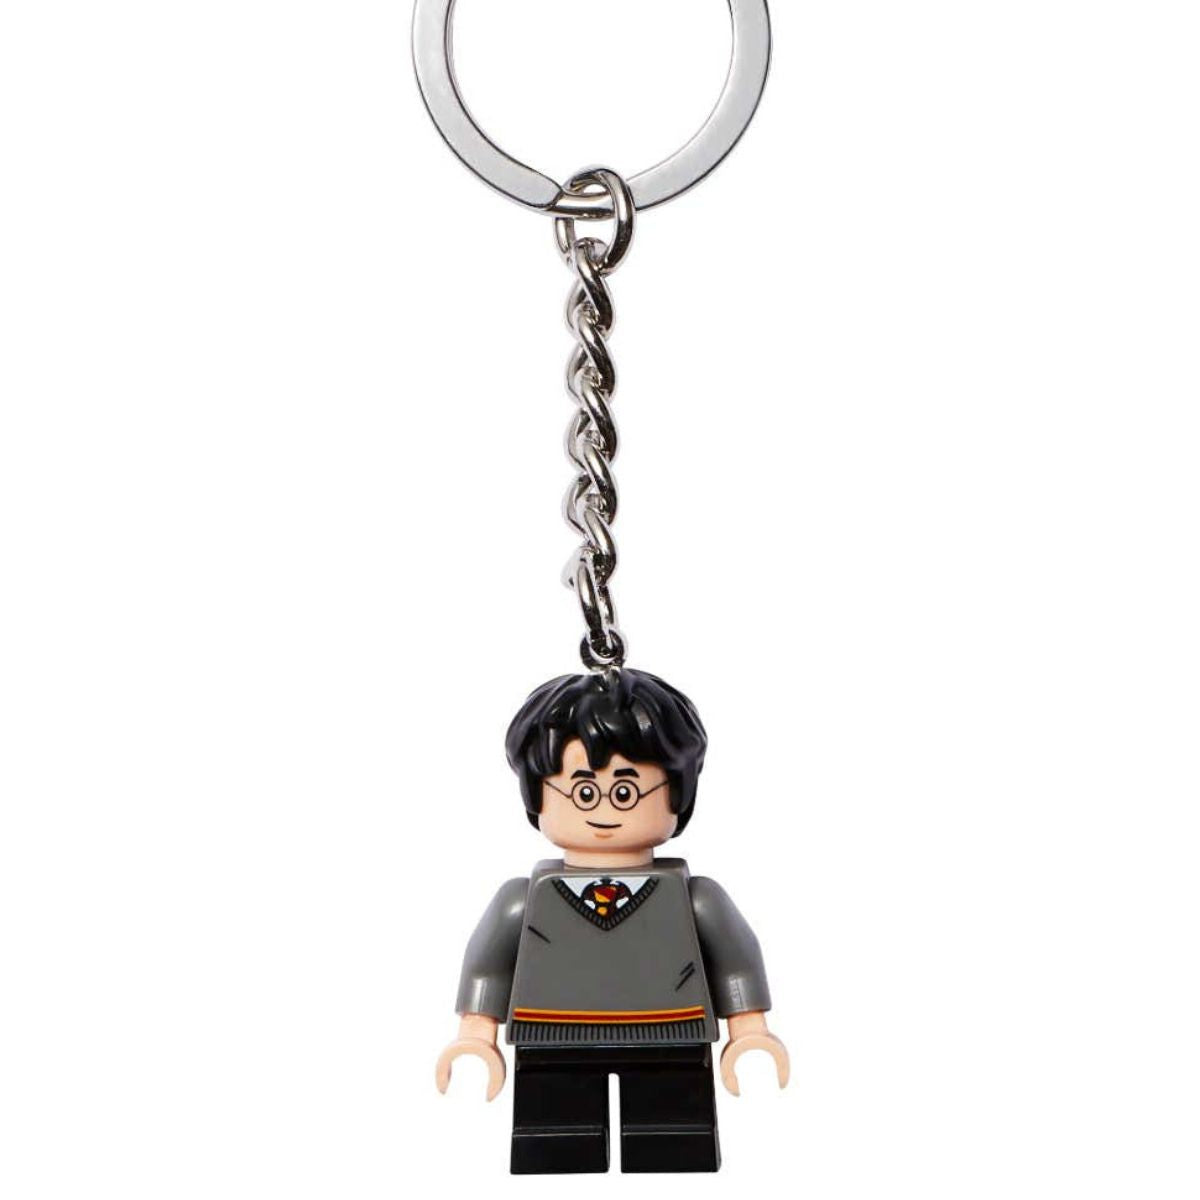 LEGO® Harry Potter Harry Potter Key Chain Keyring